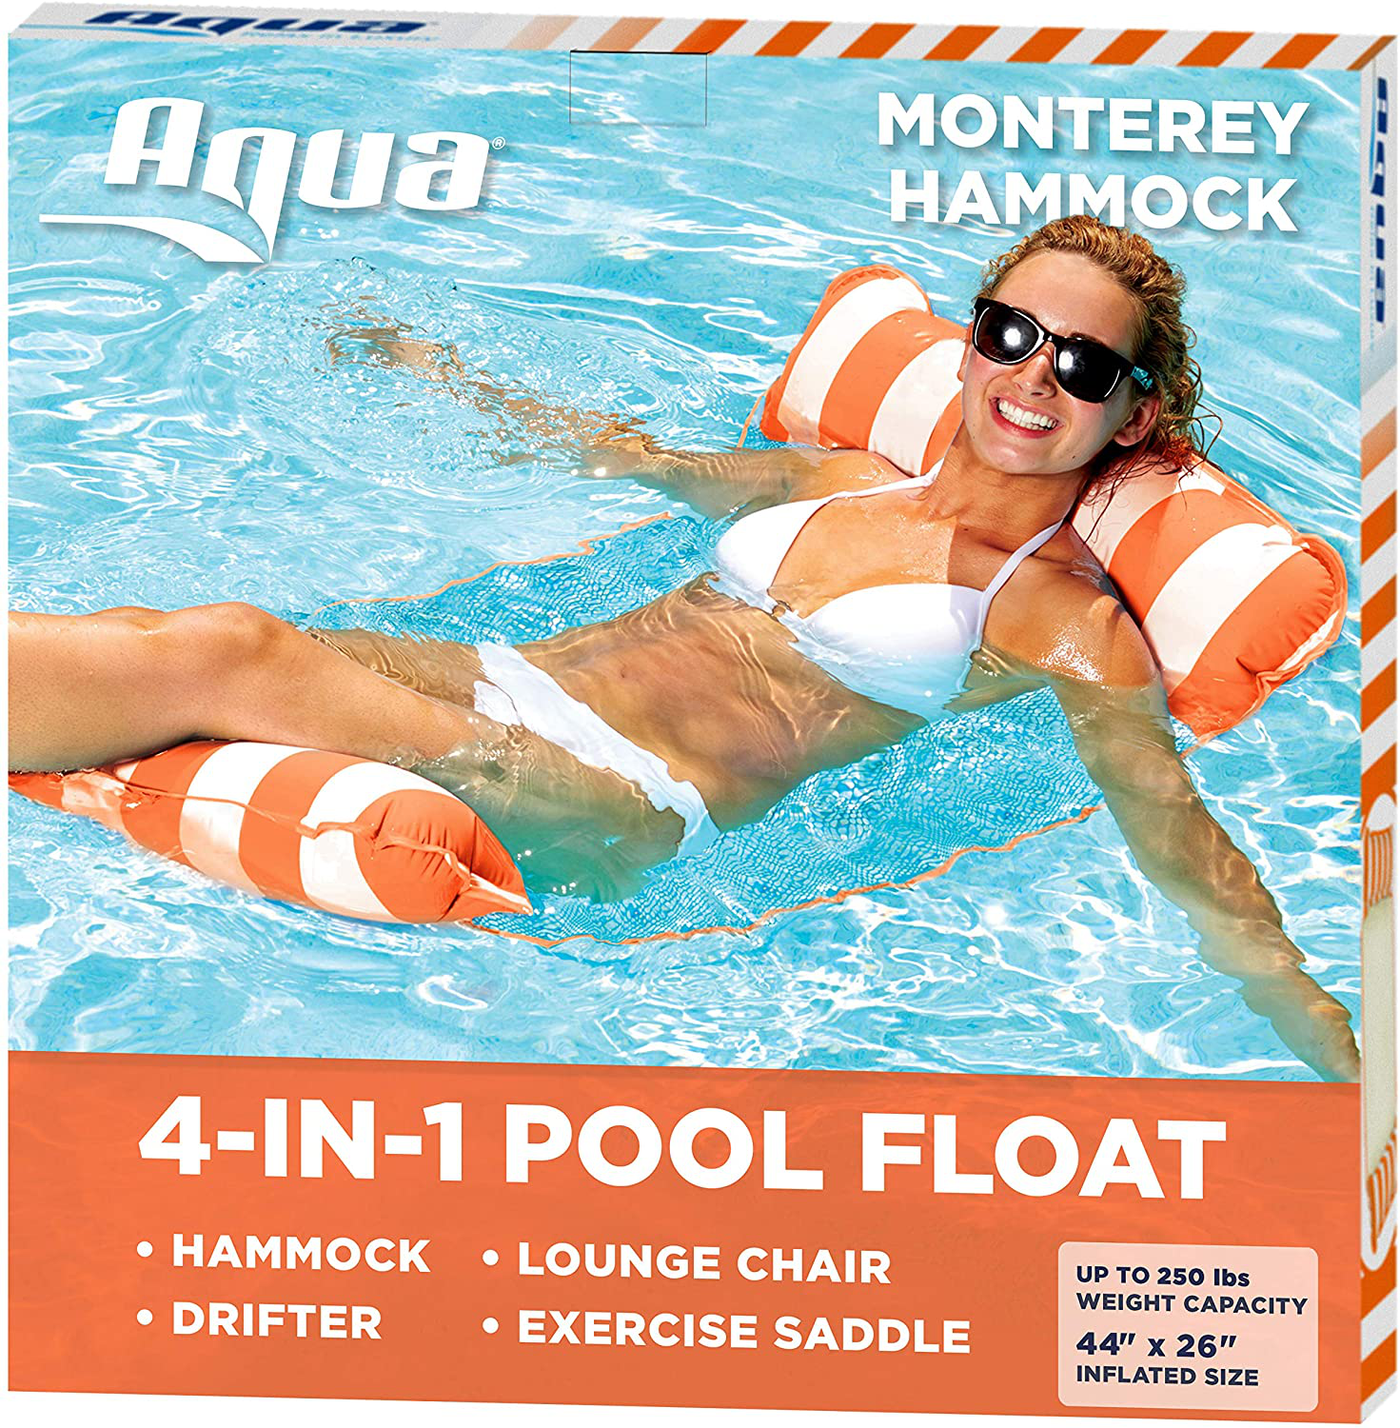 Aqua LEISURE 4-in-1 Monterey Hammock Inflatable Pool Float, Multi-Purpose Pool Hammock (Saddle, Lounge Chair, Hammock, Drifter) Pool Chair, Portable Water Hammock, Orange/White Stripe, One Size